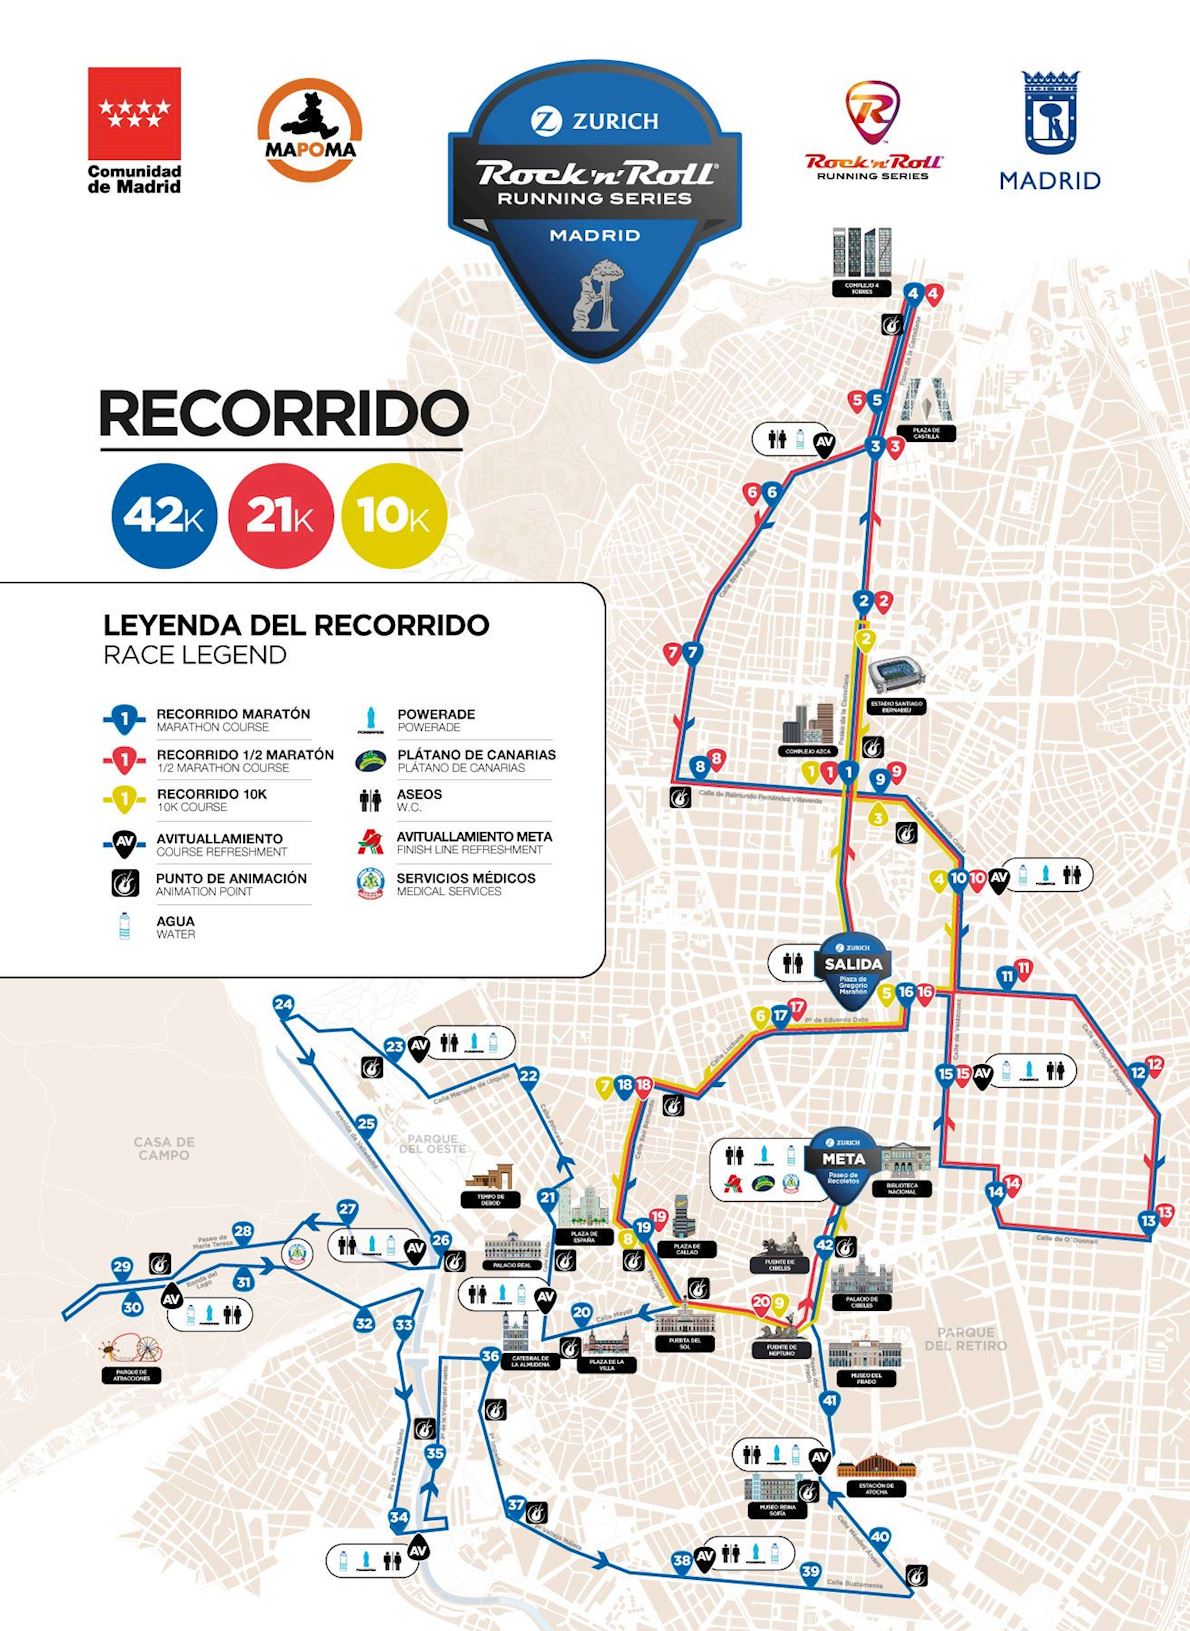 ZURICH Rock'n'Roll Running Series Madrid Mappa del percorso